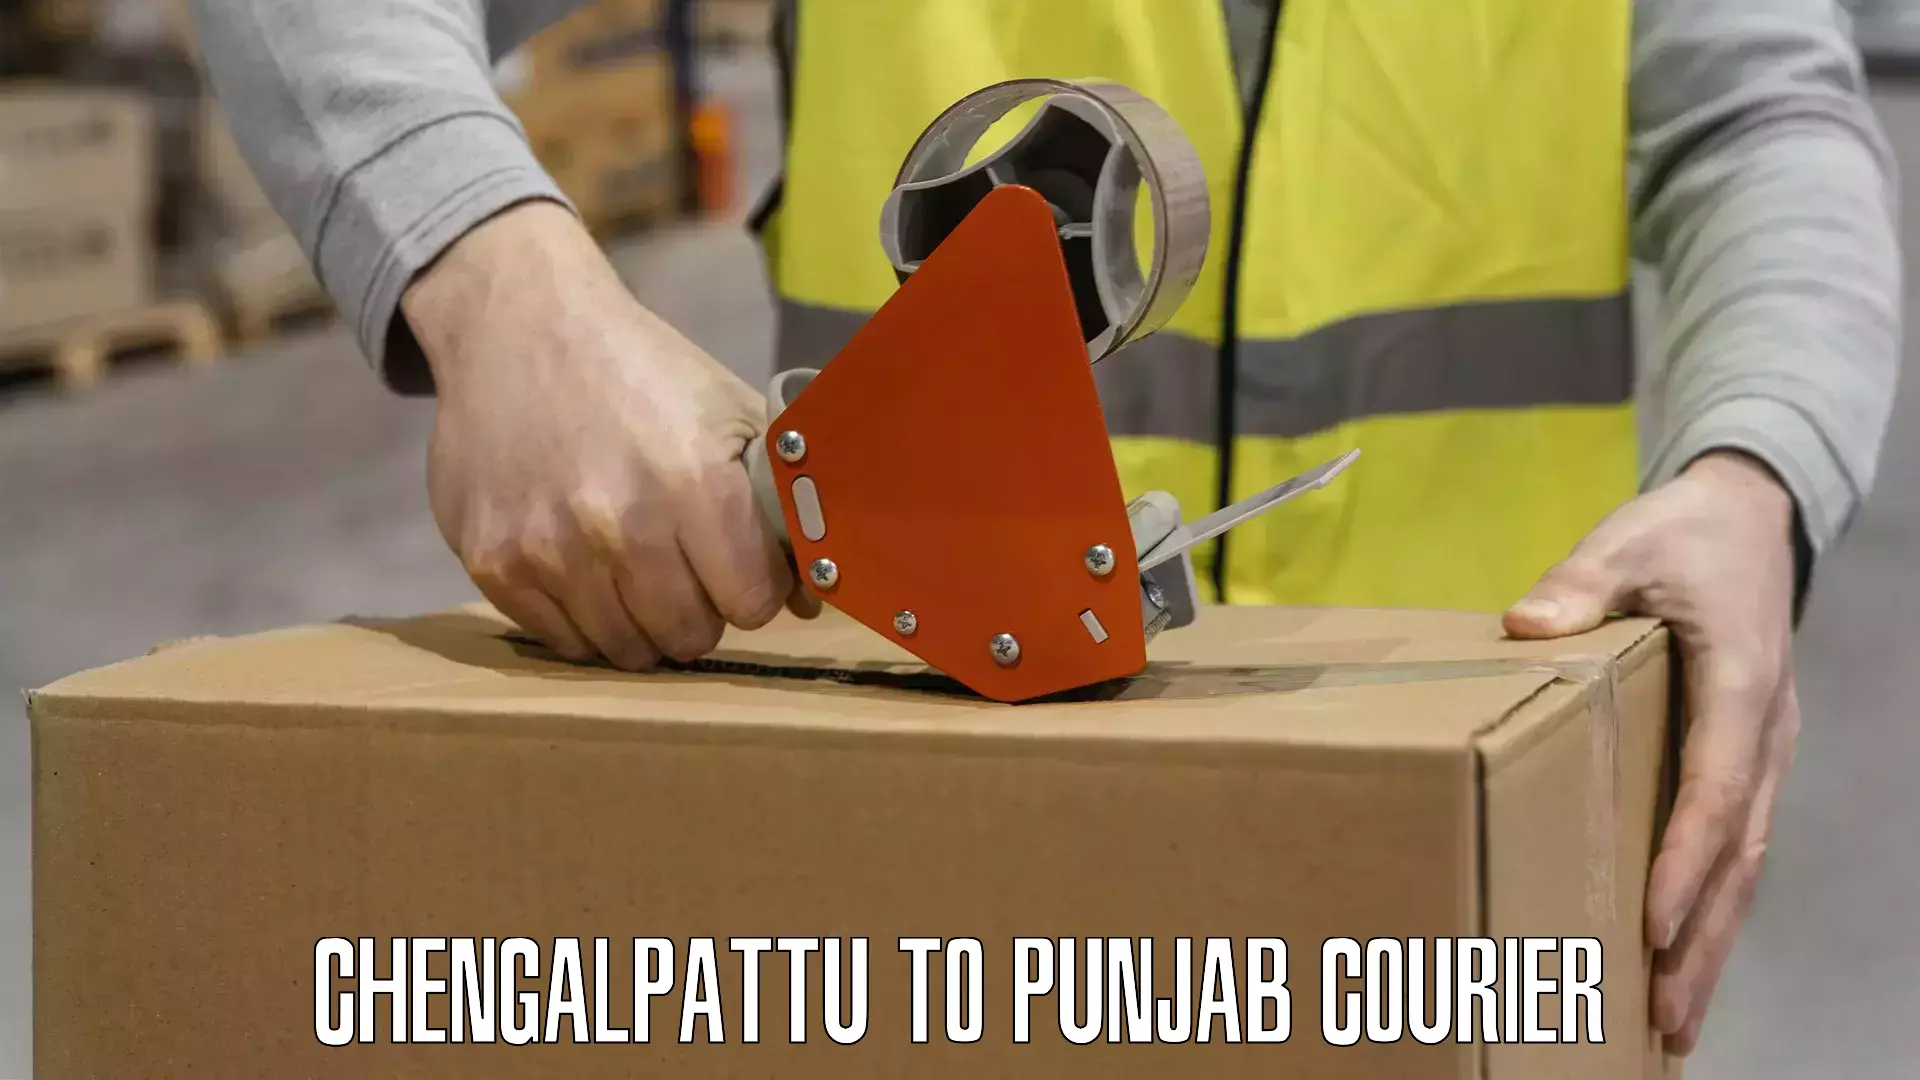 Cargo delivery service Chengalpattu to Punjab